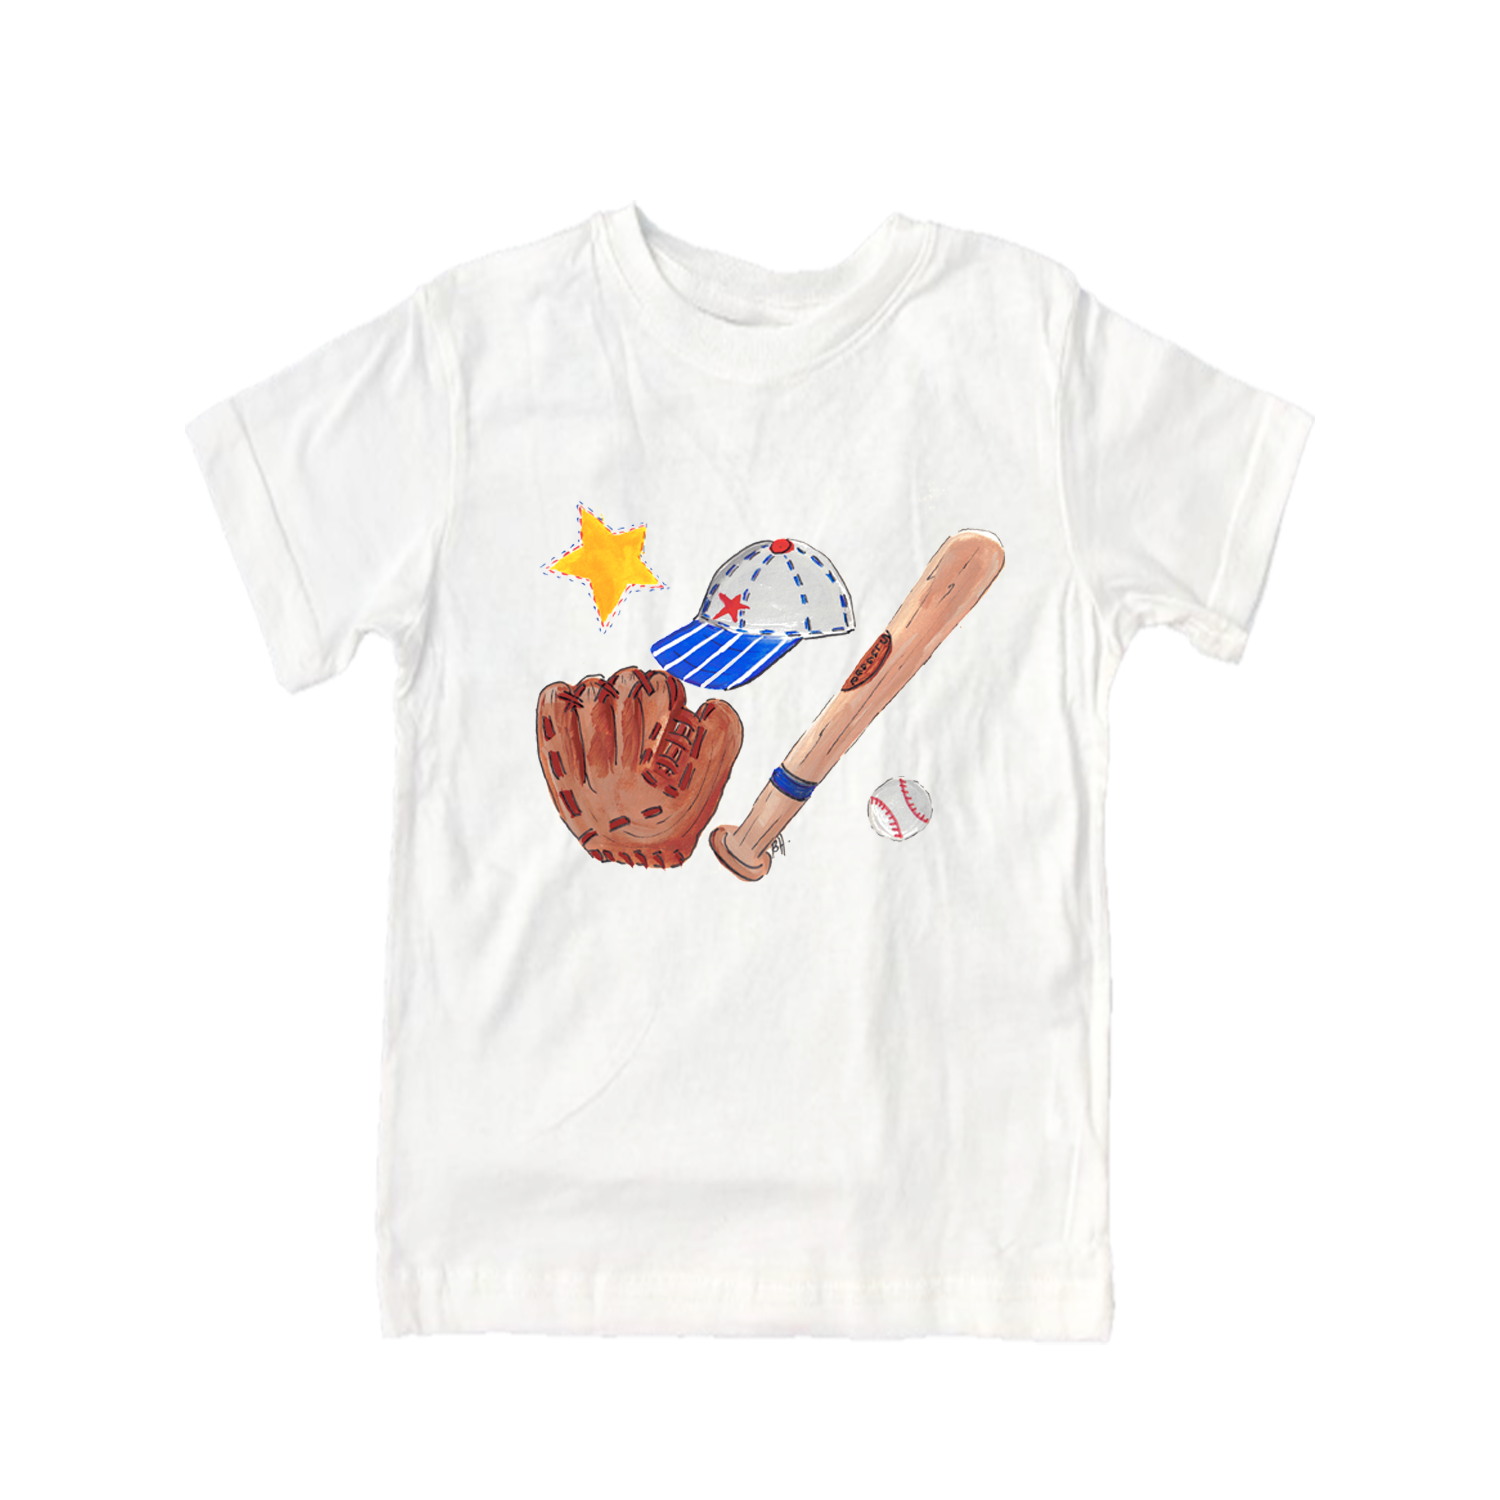 Cotton Tee Shirt Short Sleeve 408 Baseball